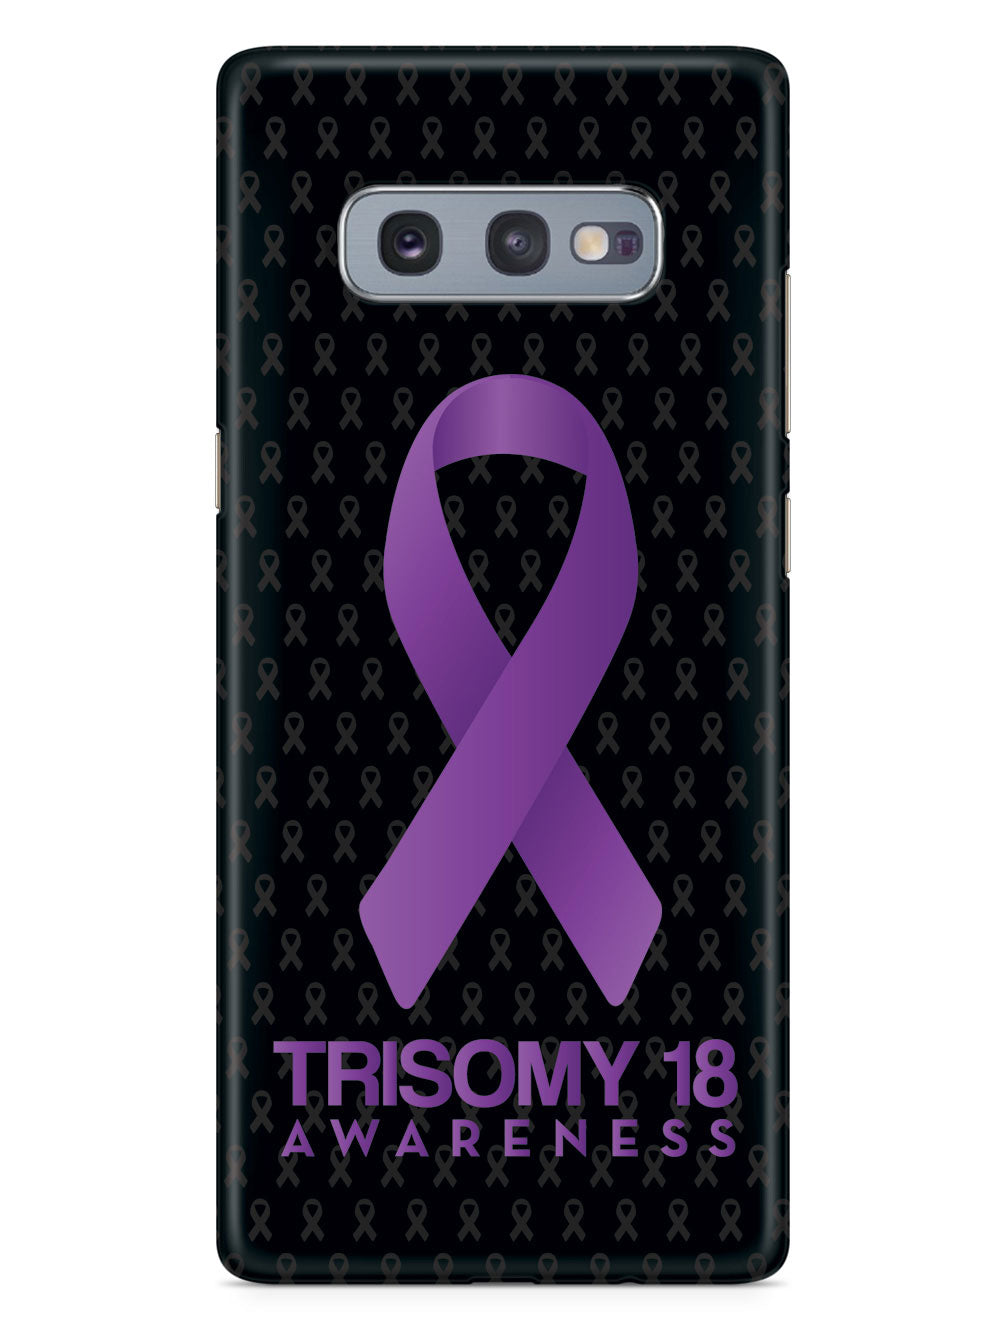 Trisomy 18 - Awareness Ribbon - Black Case